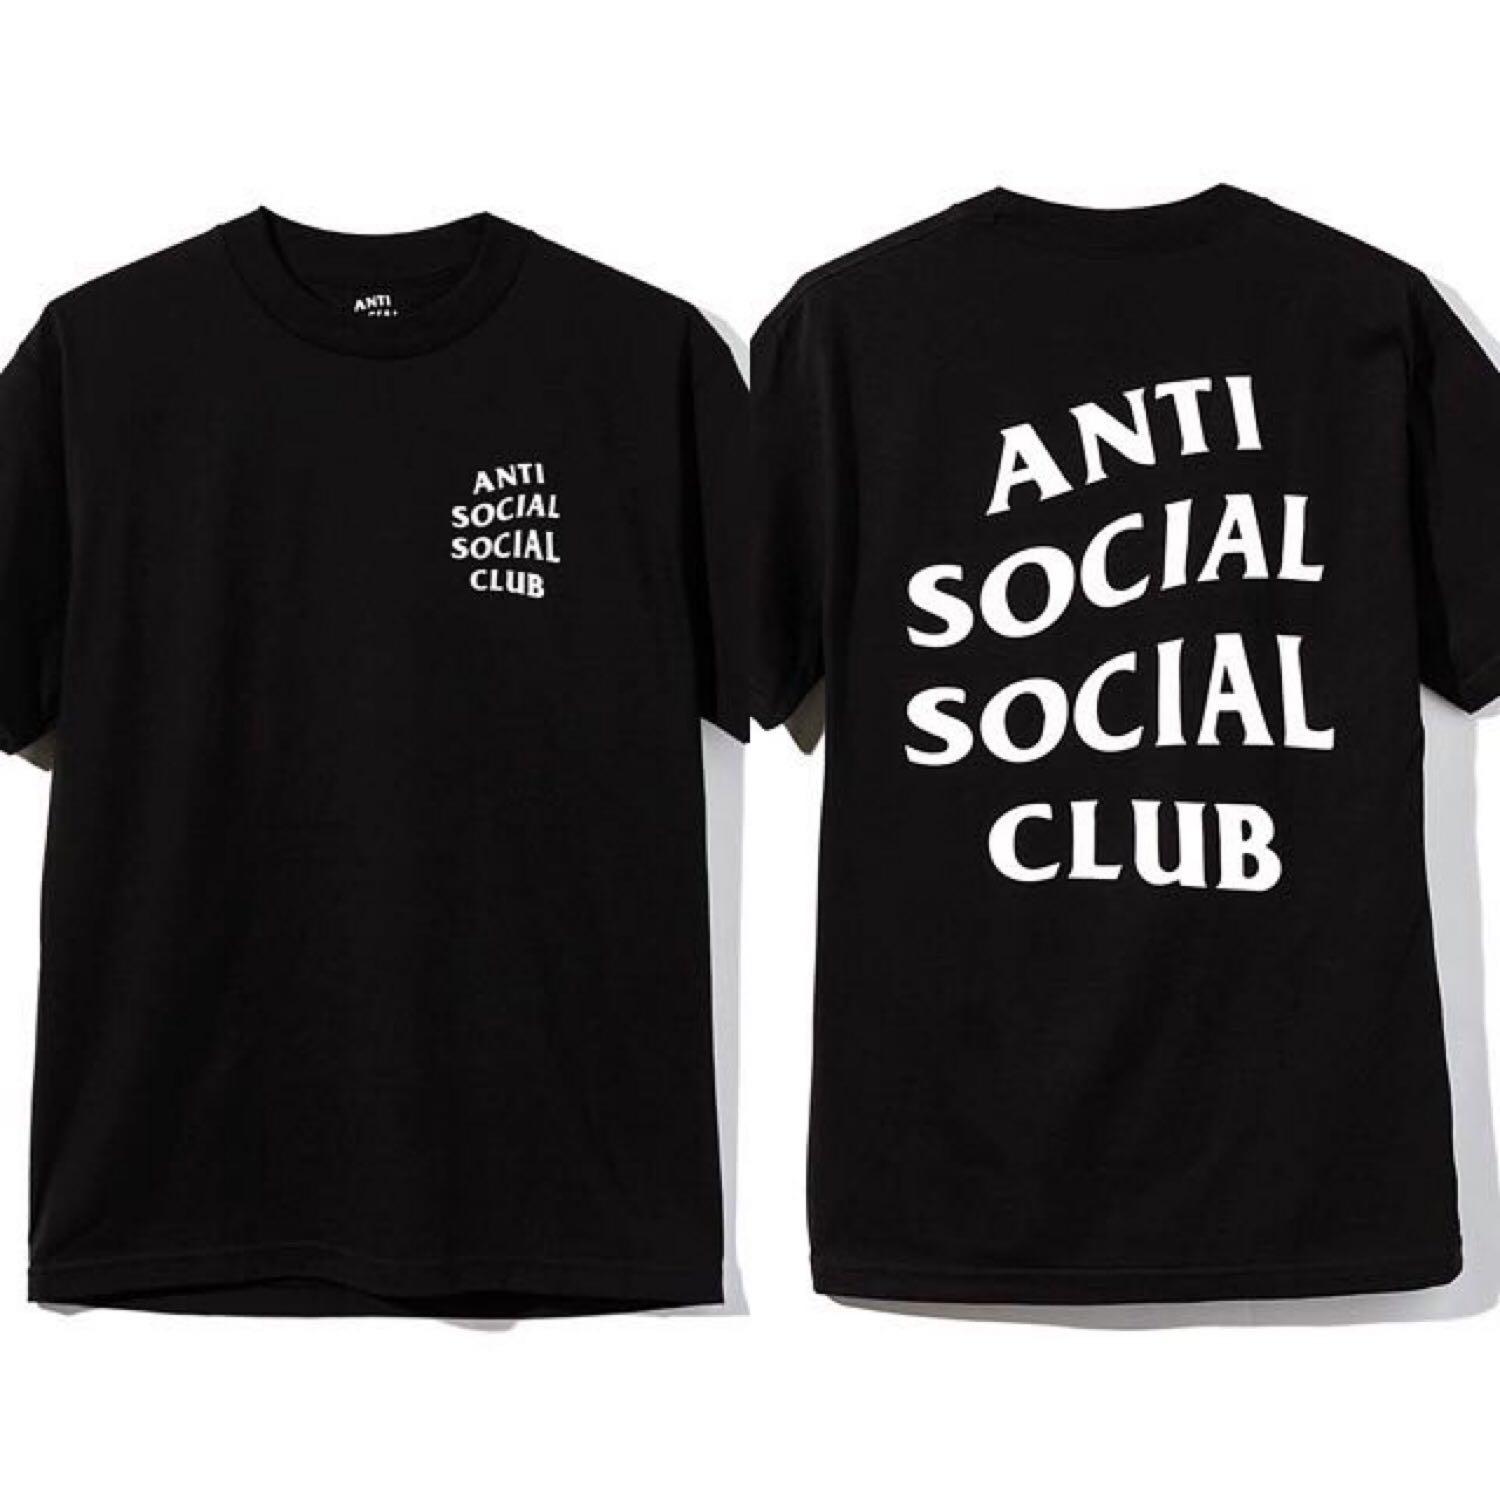 Anti social social club купить. Anti social social Club футболка. Anti social social Club t-Shirt. Кофта Anti social social Club. Anti social social Club рубашка.